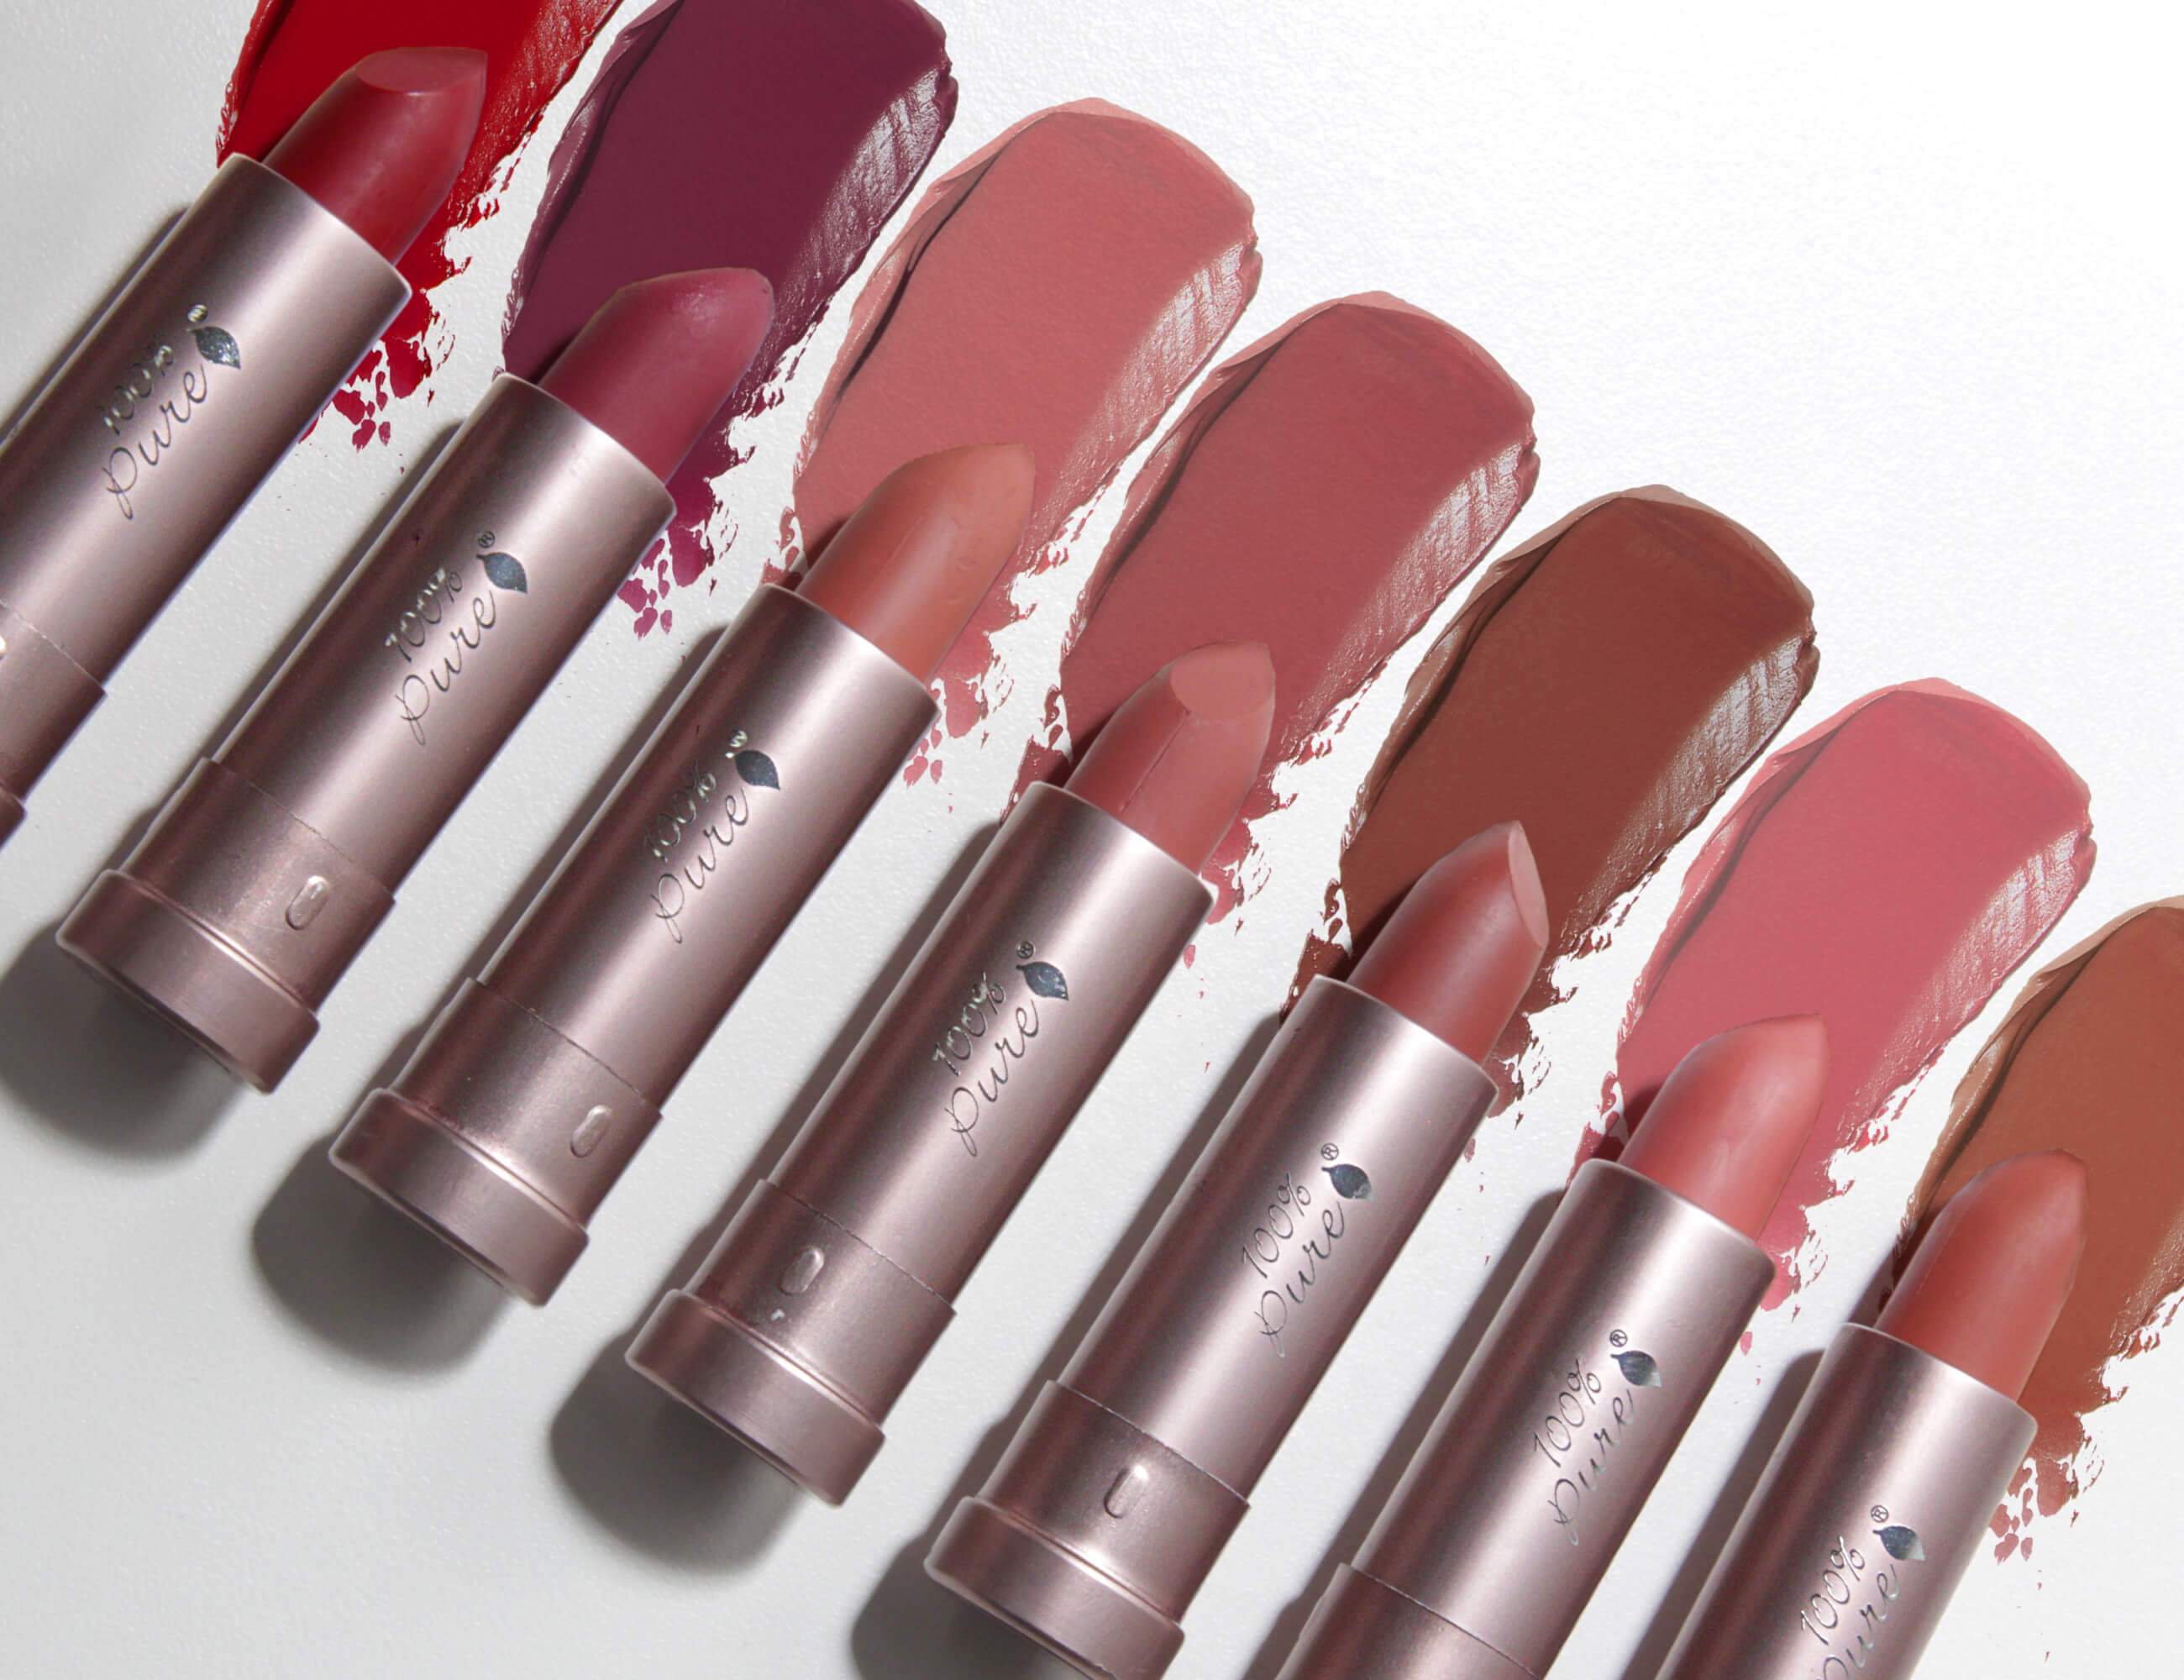 28 Best Nude Lipsticks - Flattering Nude Lip Colors for 2018